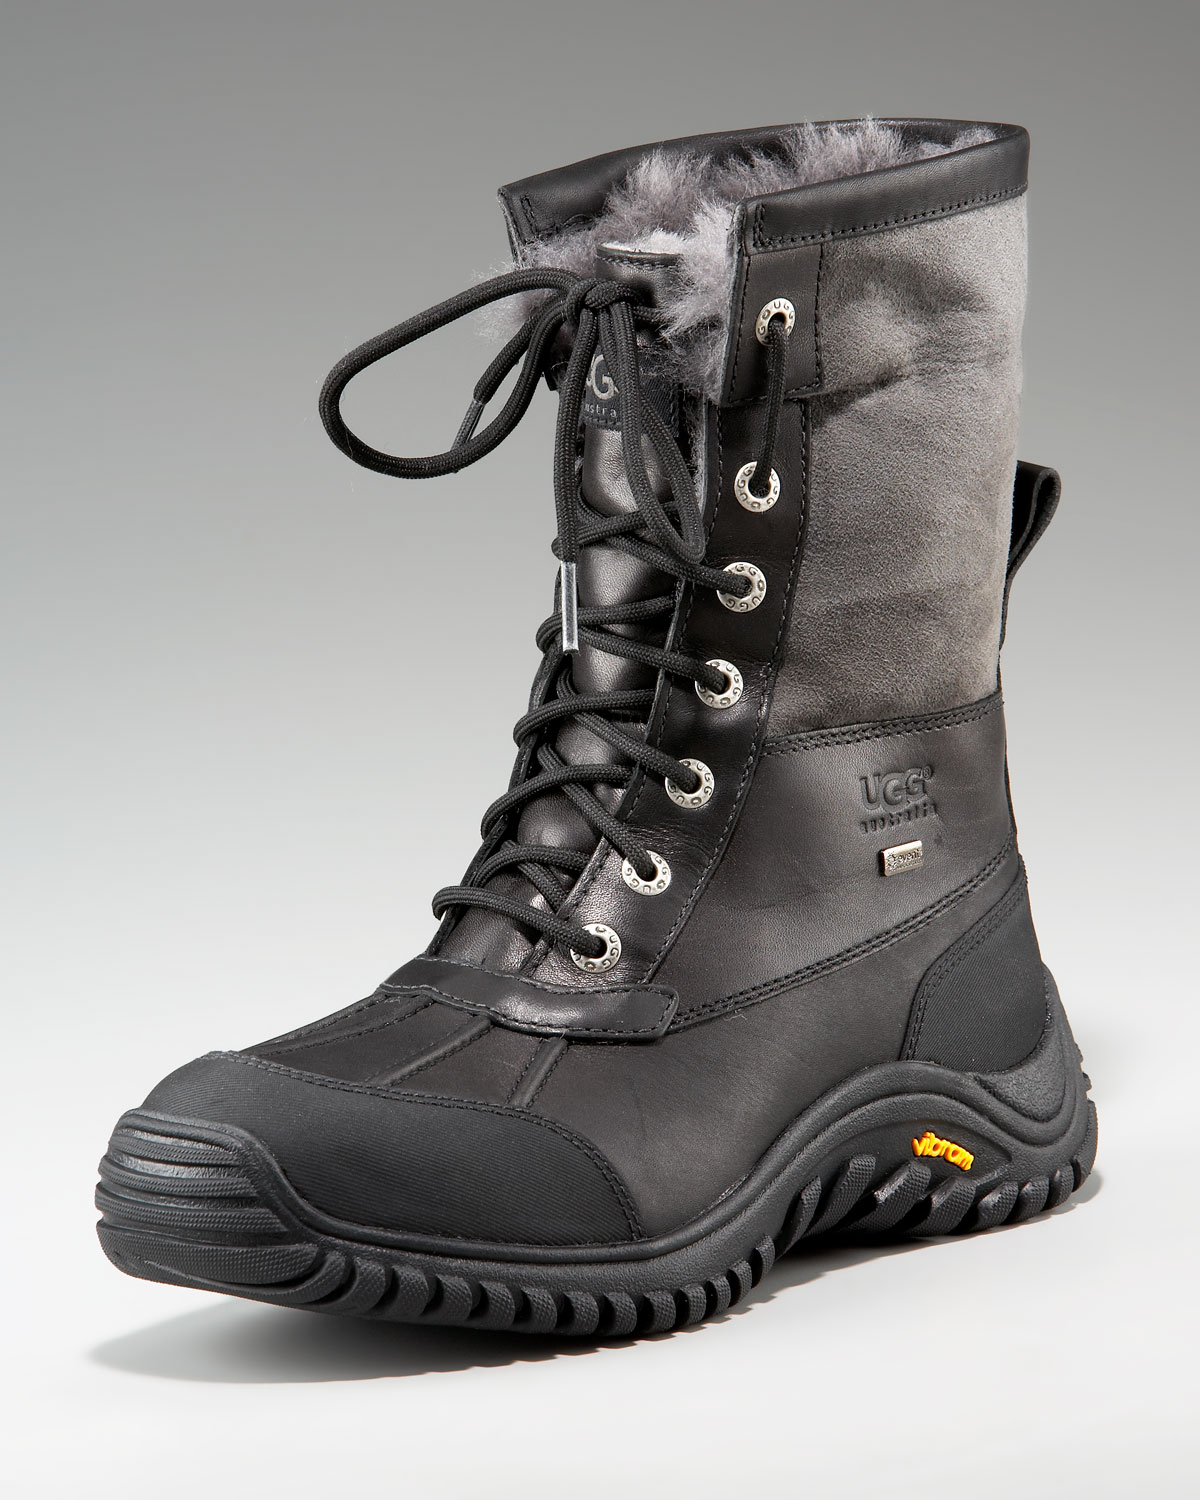 UGG Adirondack Lug-sole Boot in Black/Grey (Black) for Men - Lyst